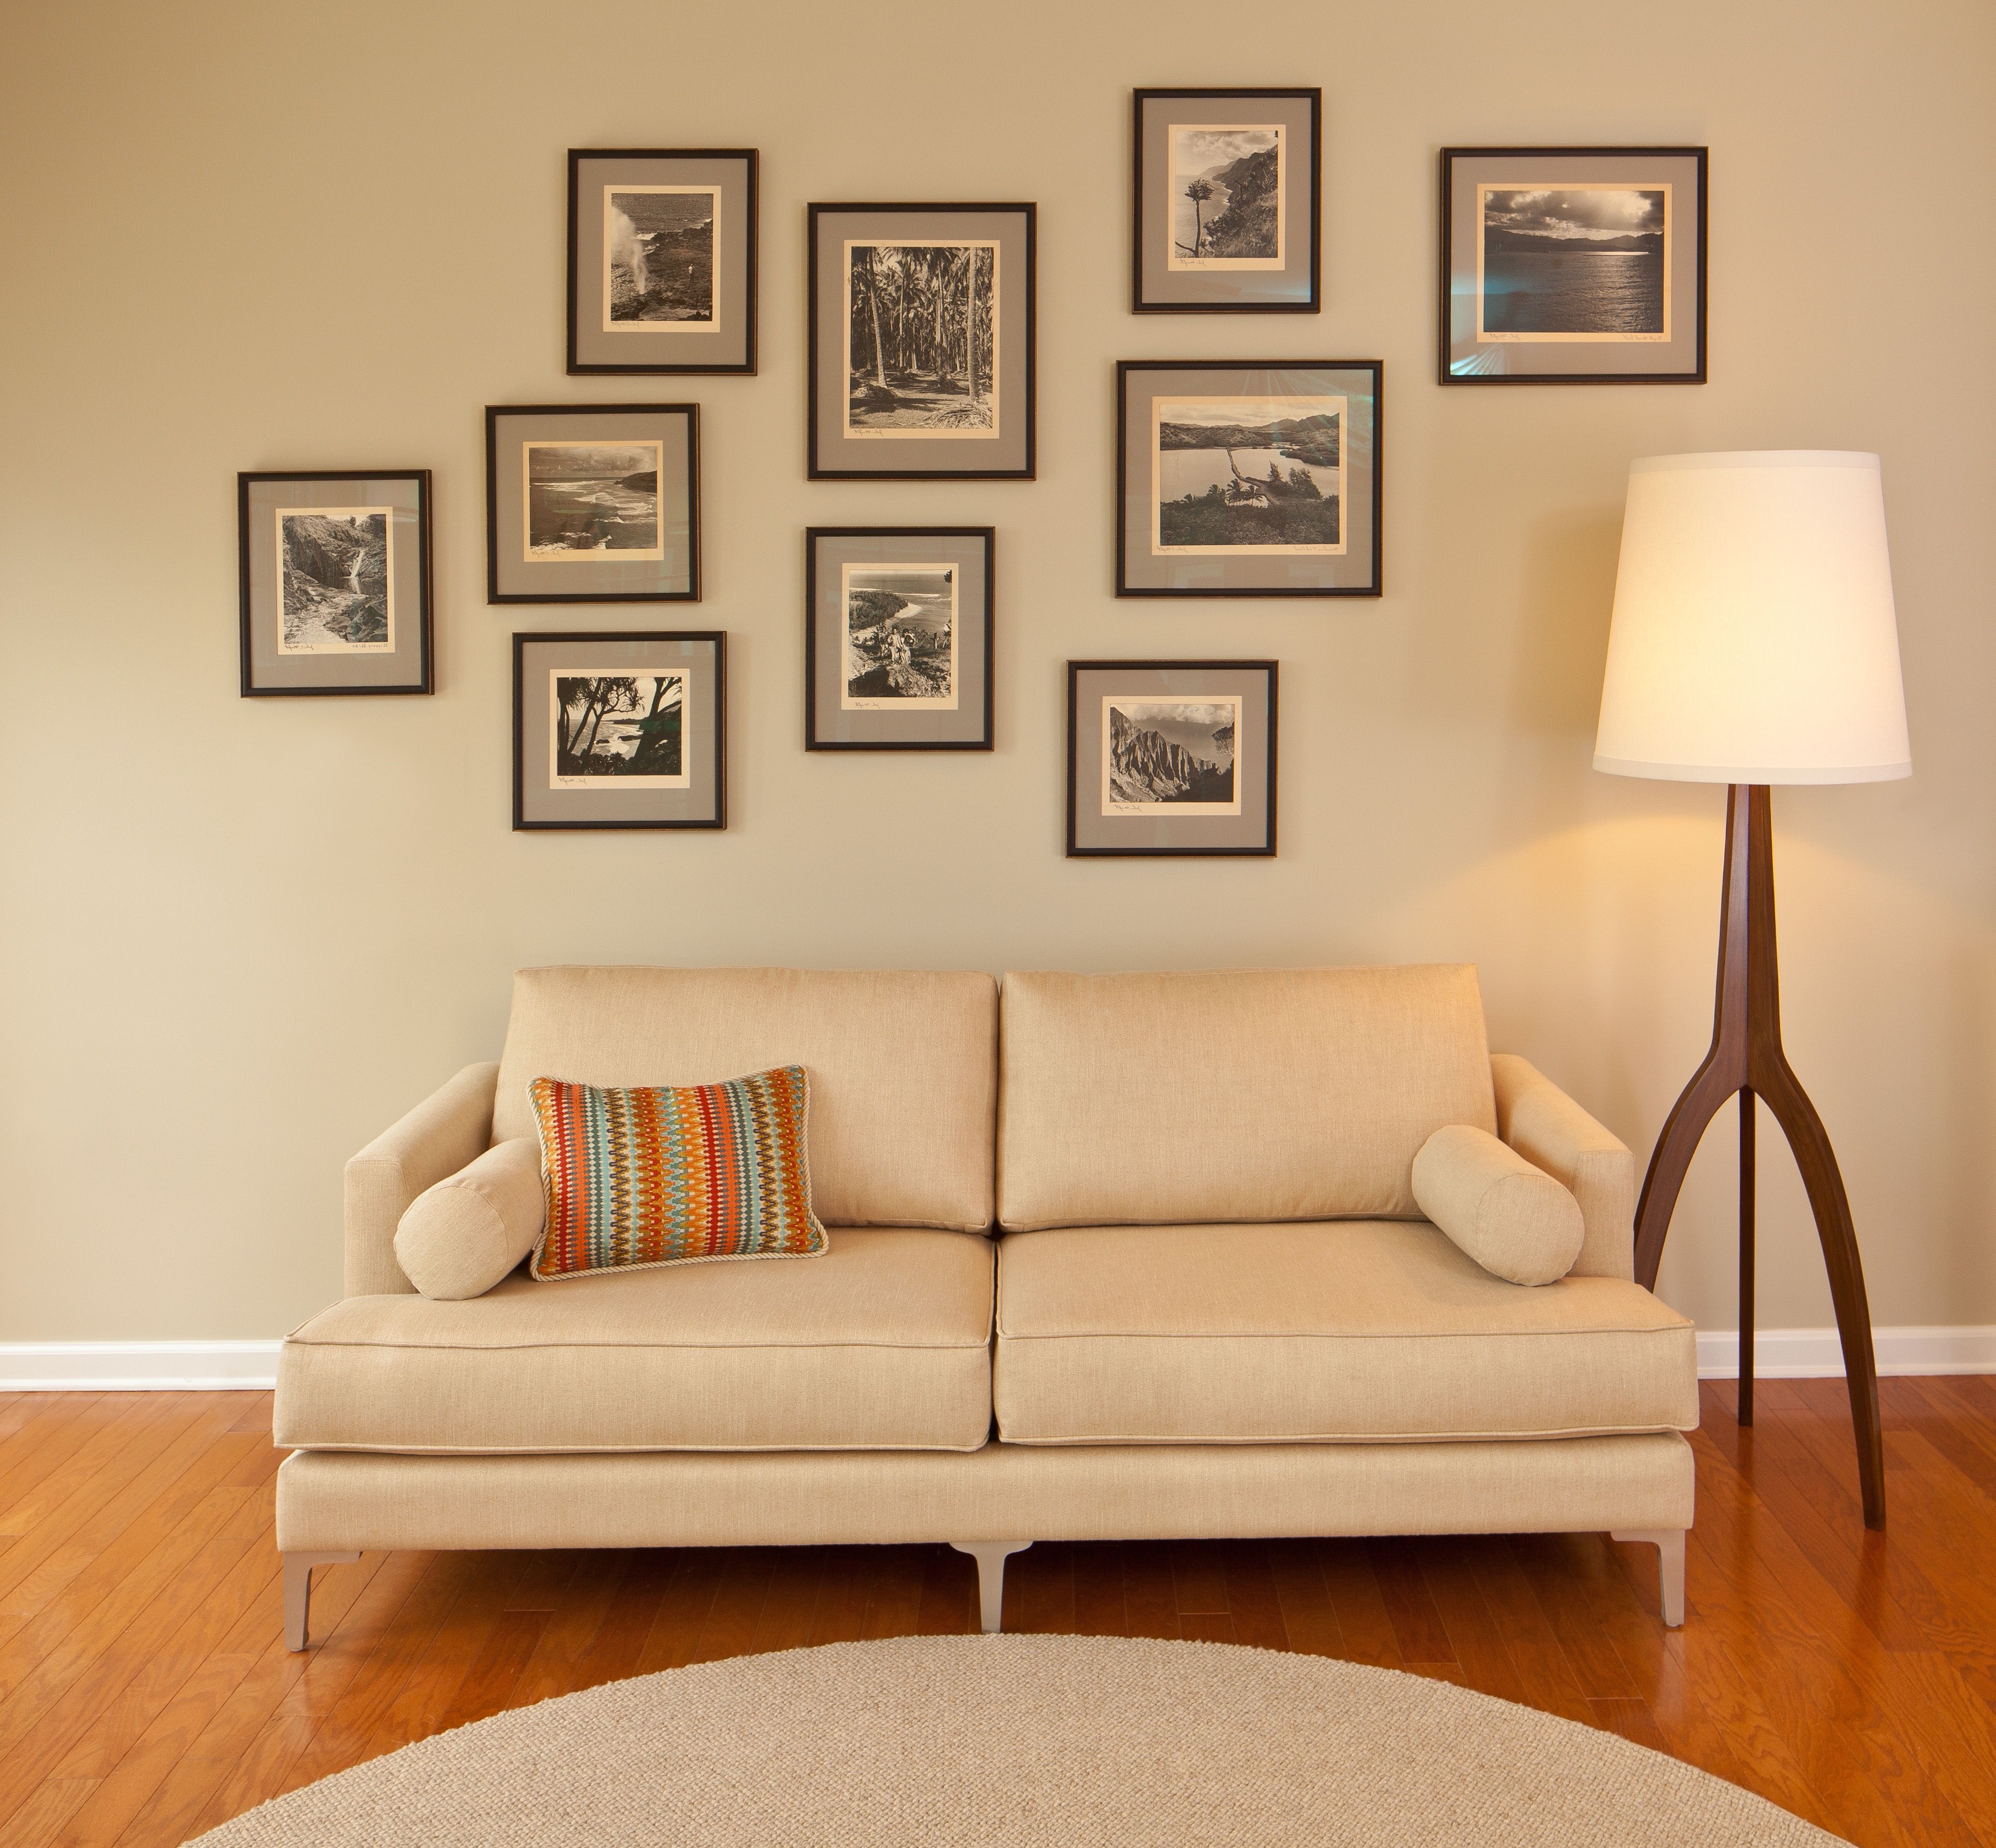 30 Beautiful Ideas For Living Room Wall Decor #18510 | Living Room Ideas